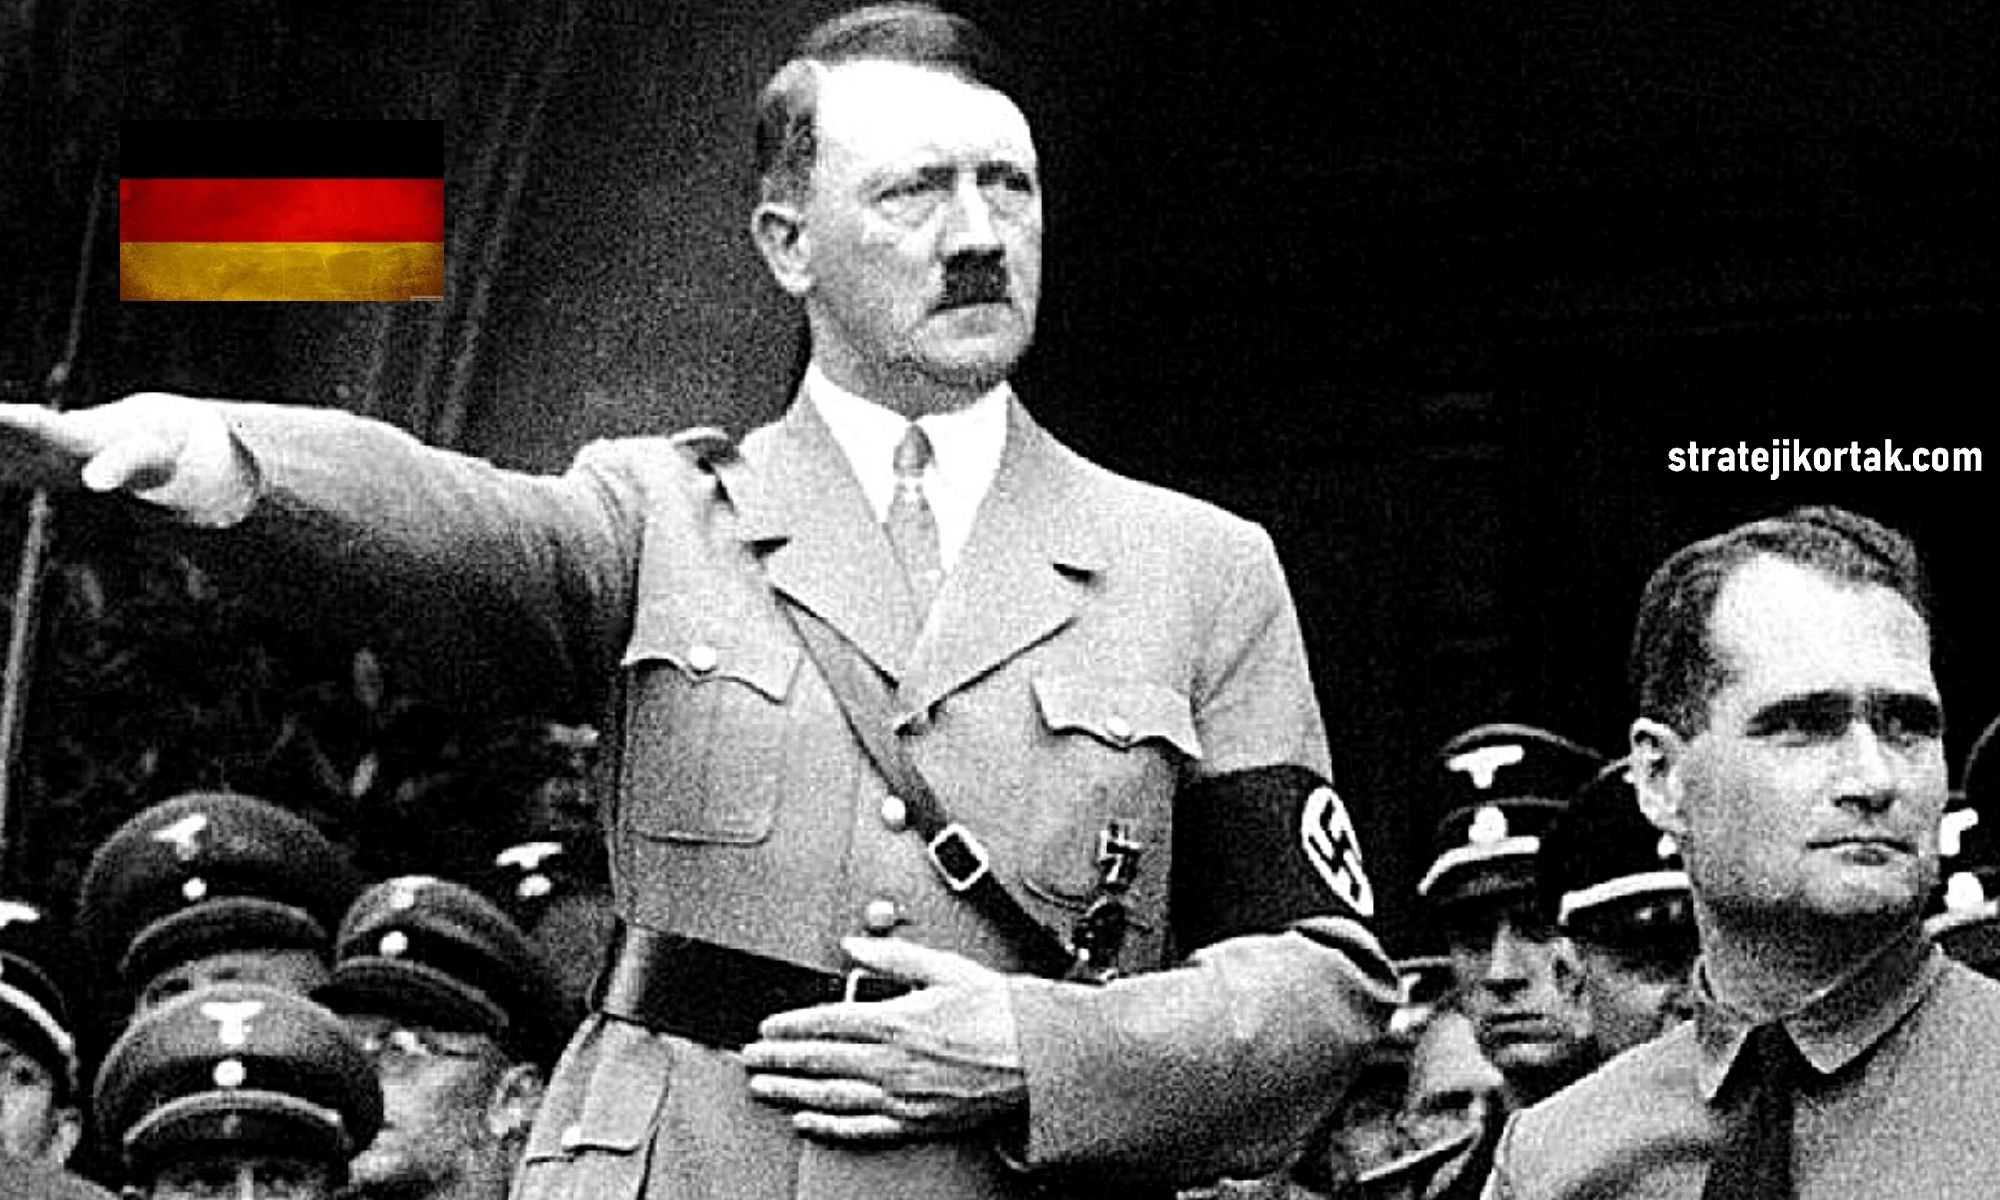 Гитлер В Юбке Картинки